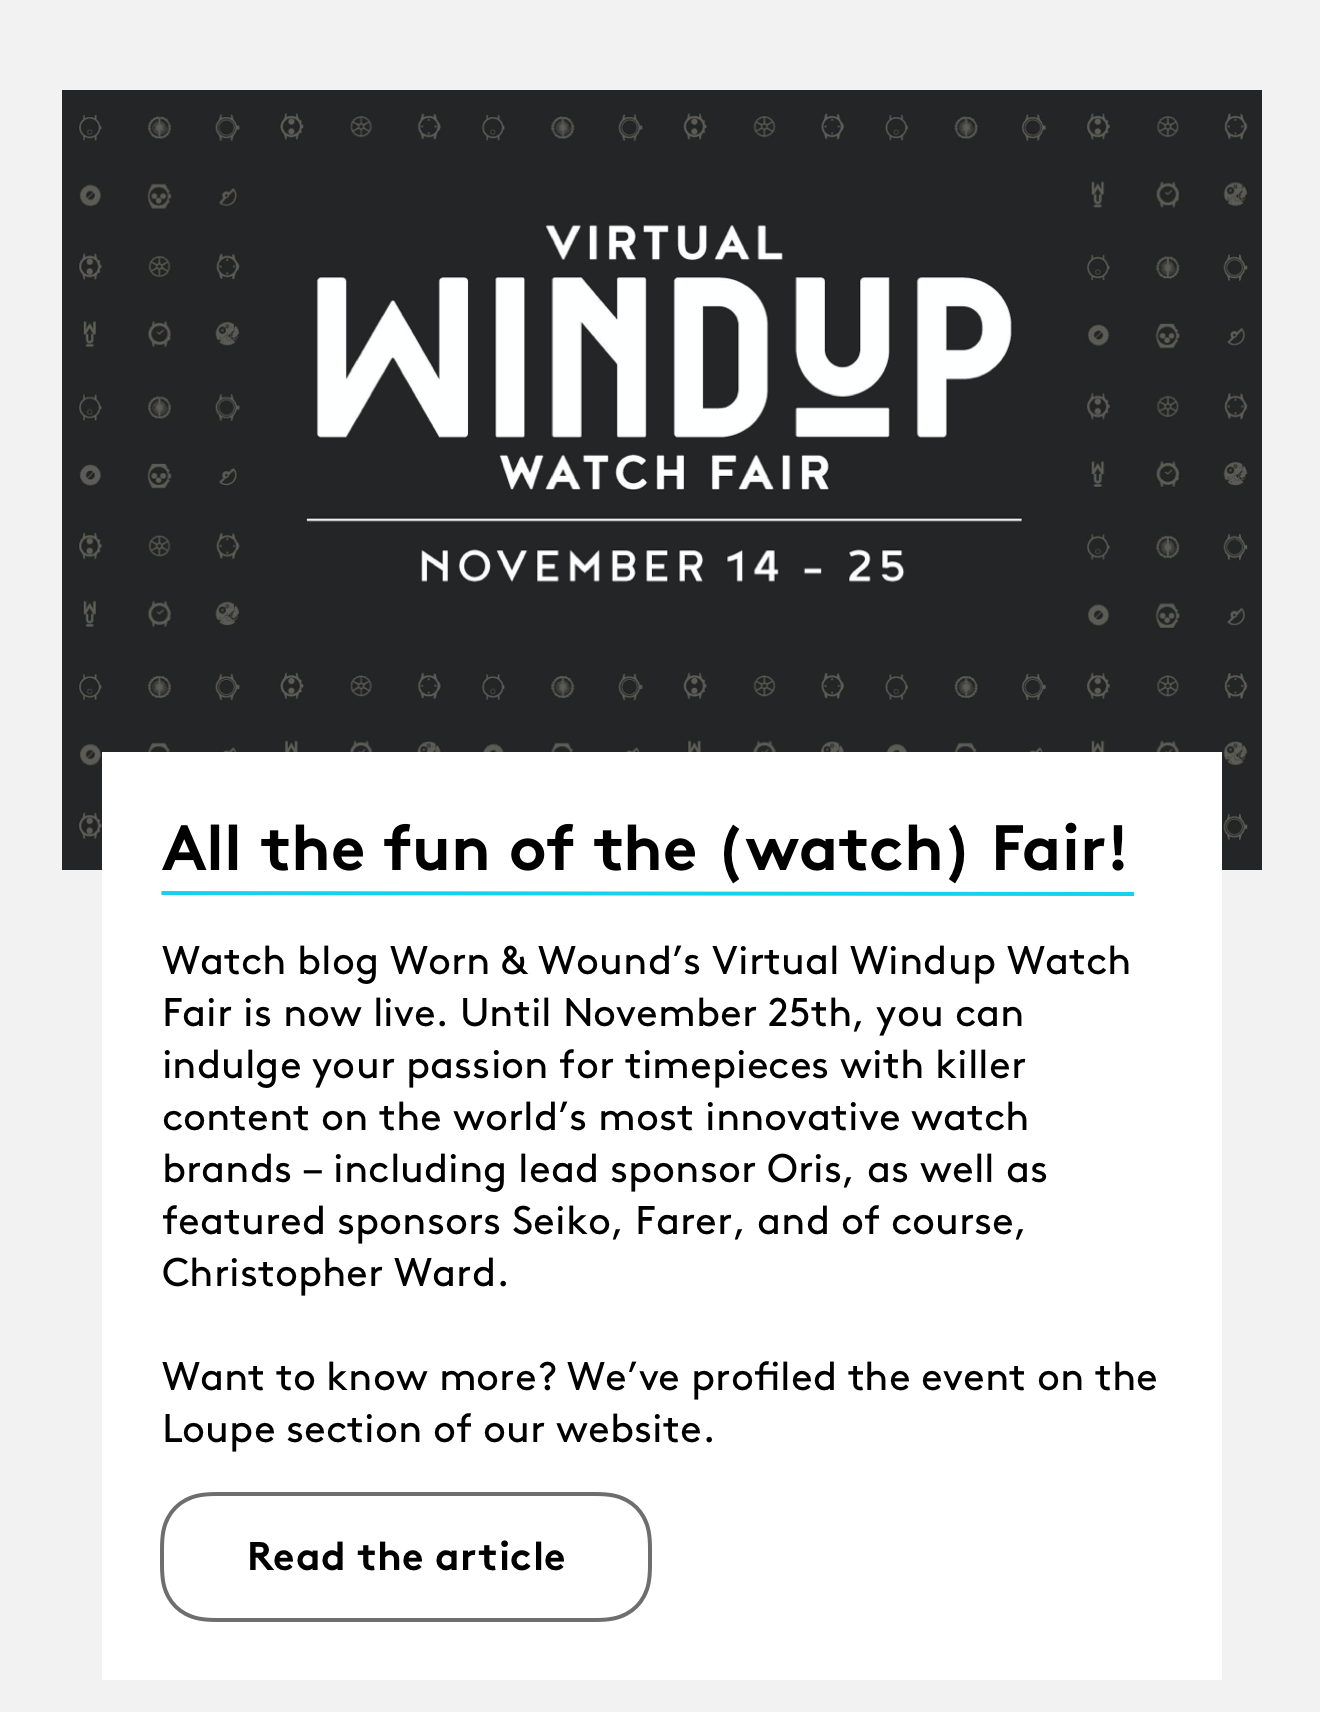 All the fun of the (watch) Fair!